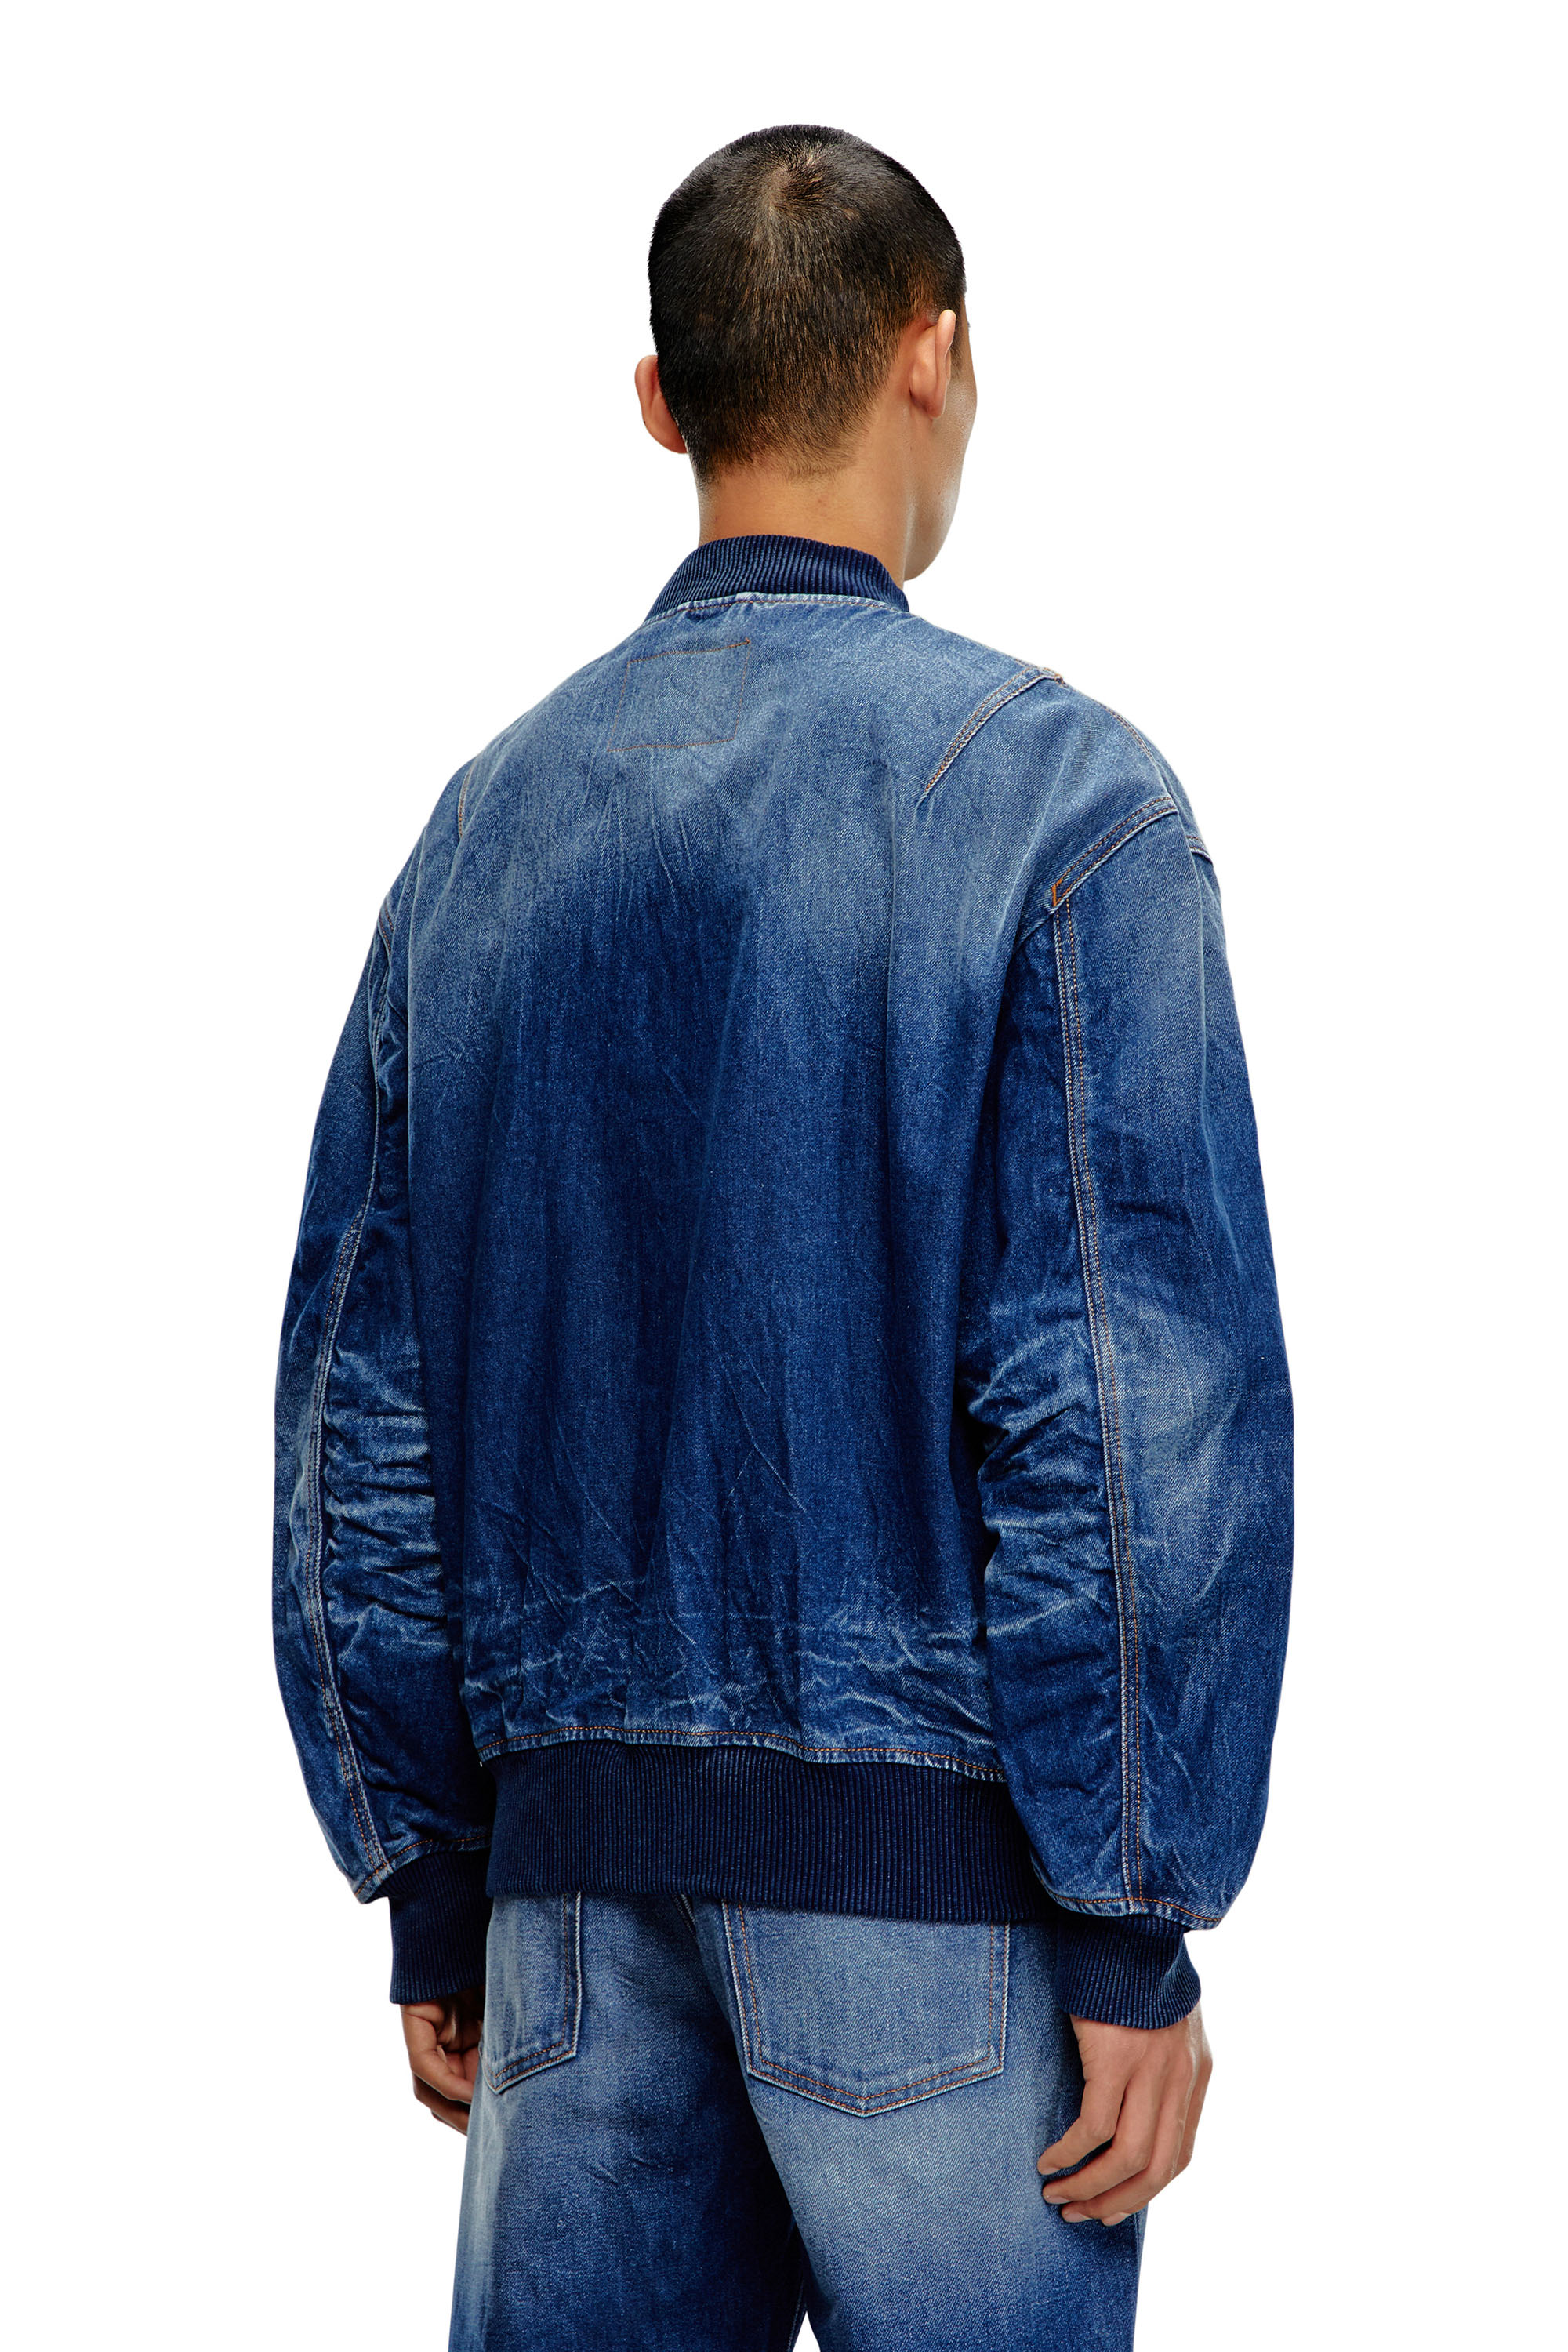 Diesel - D-VINZ-S, Man Bomber jacket in dented denim in Blue - Image 4